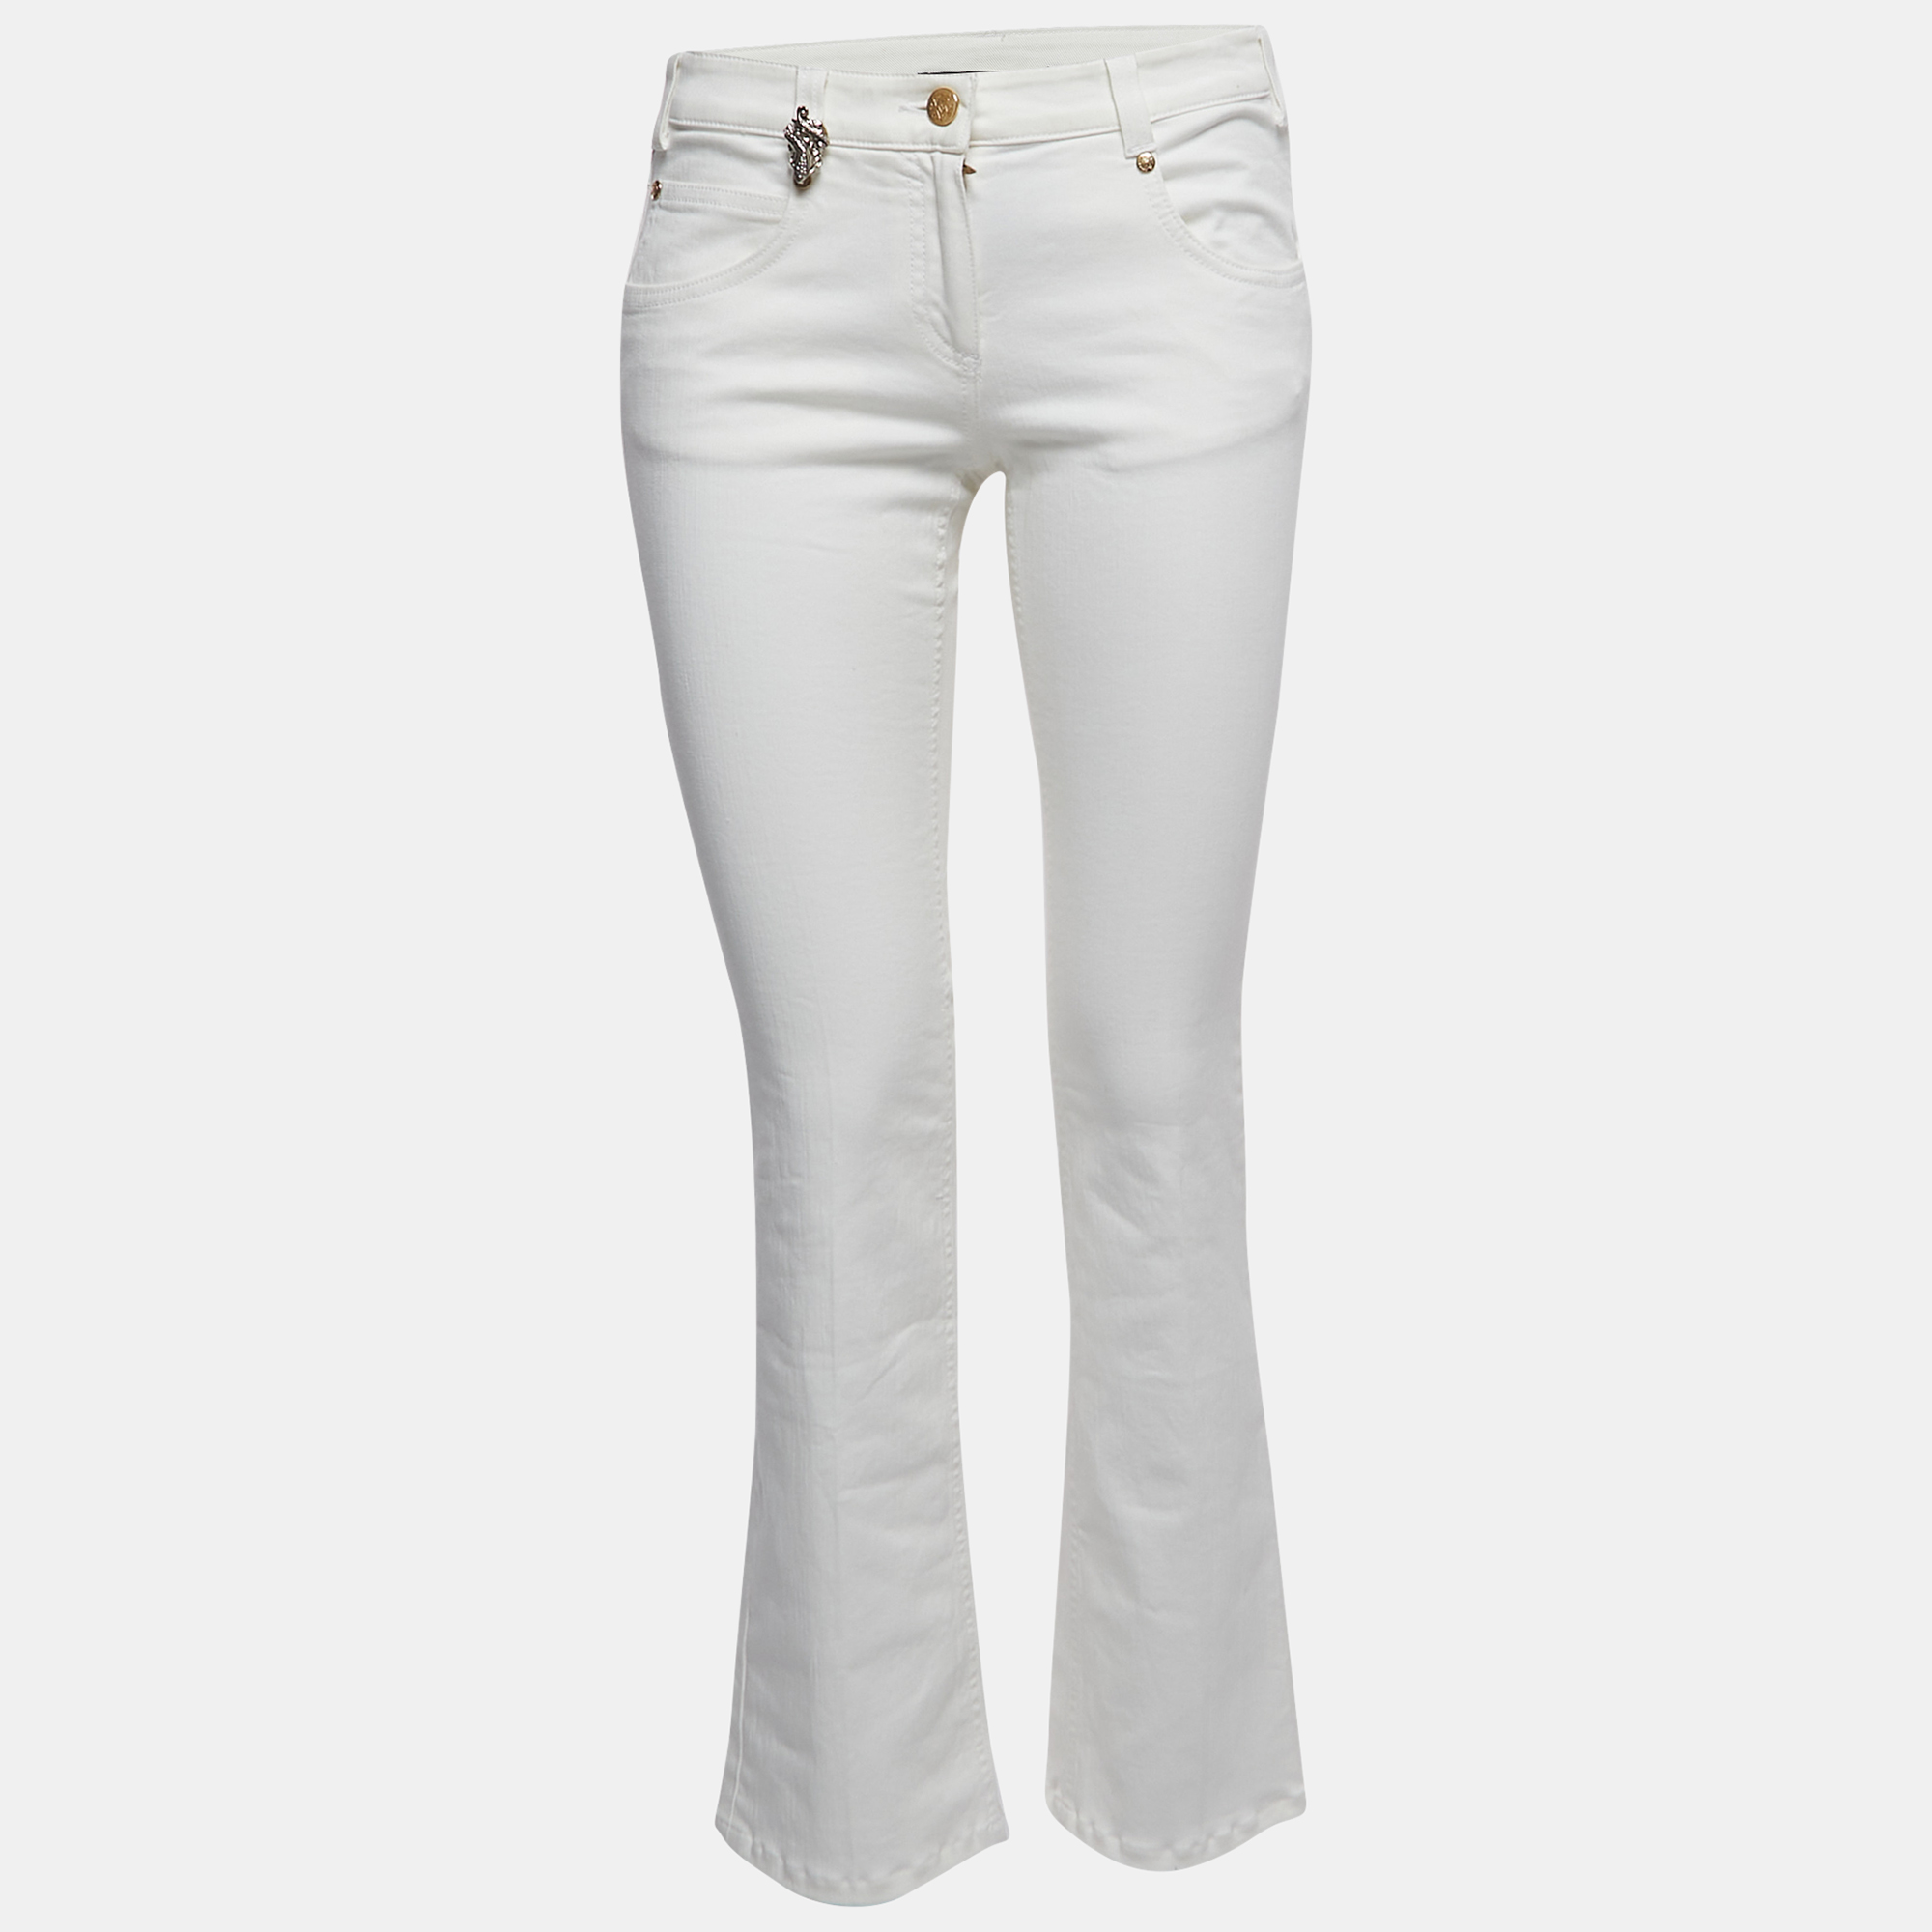 Pre-owned Roberto Cavalli Off White Denim Flared Jeans M Waist 29"